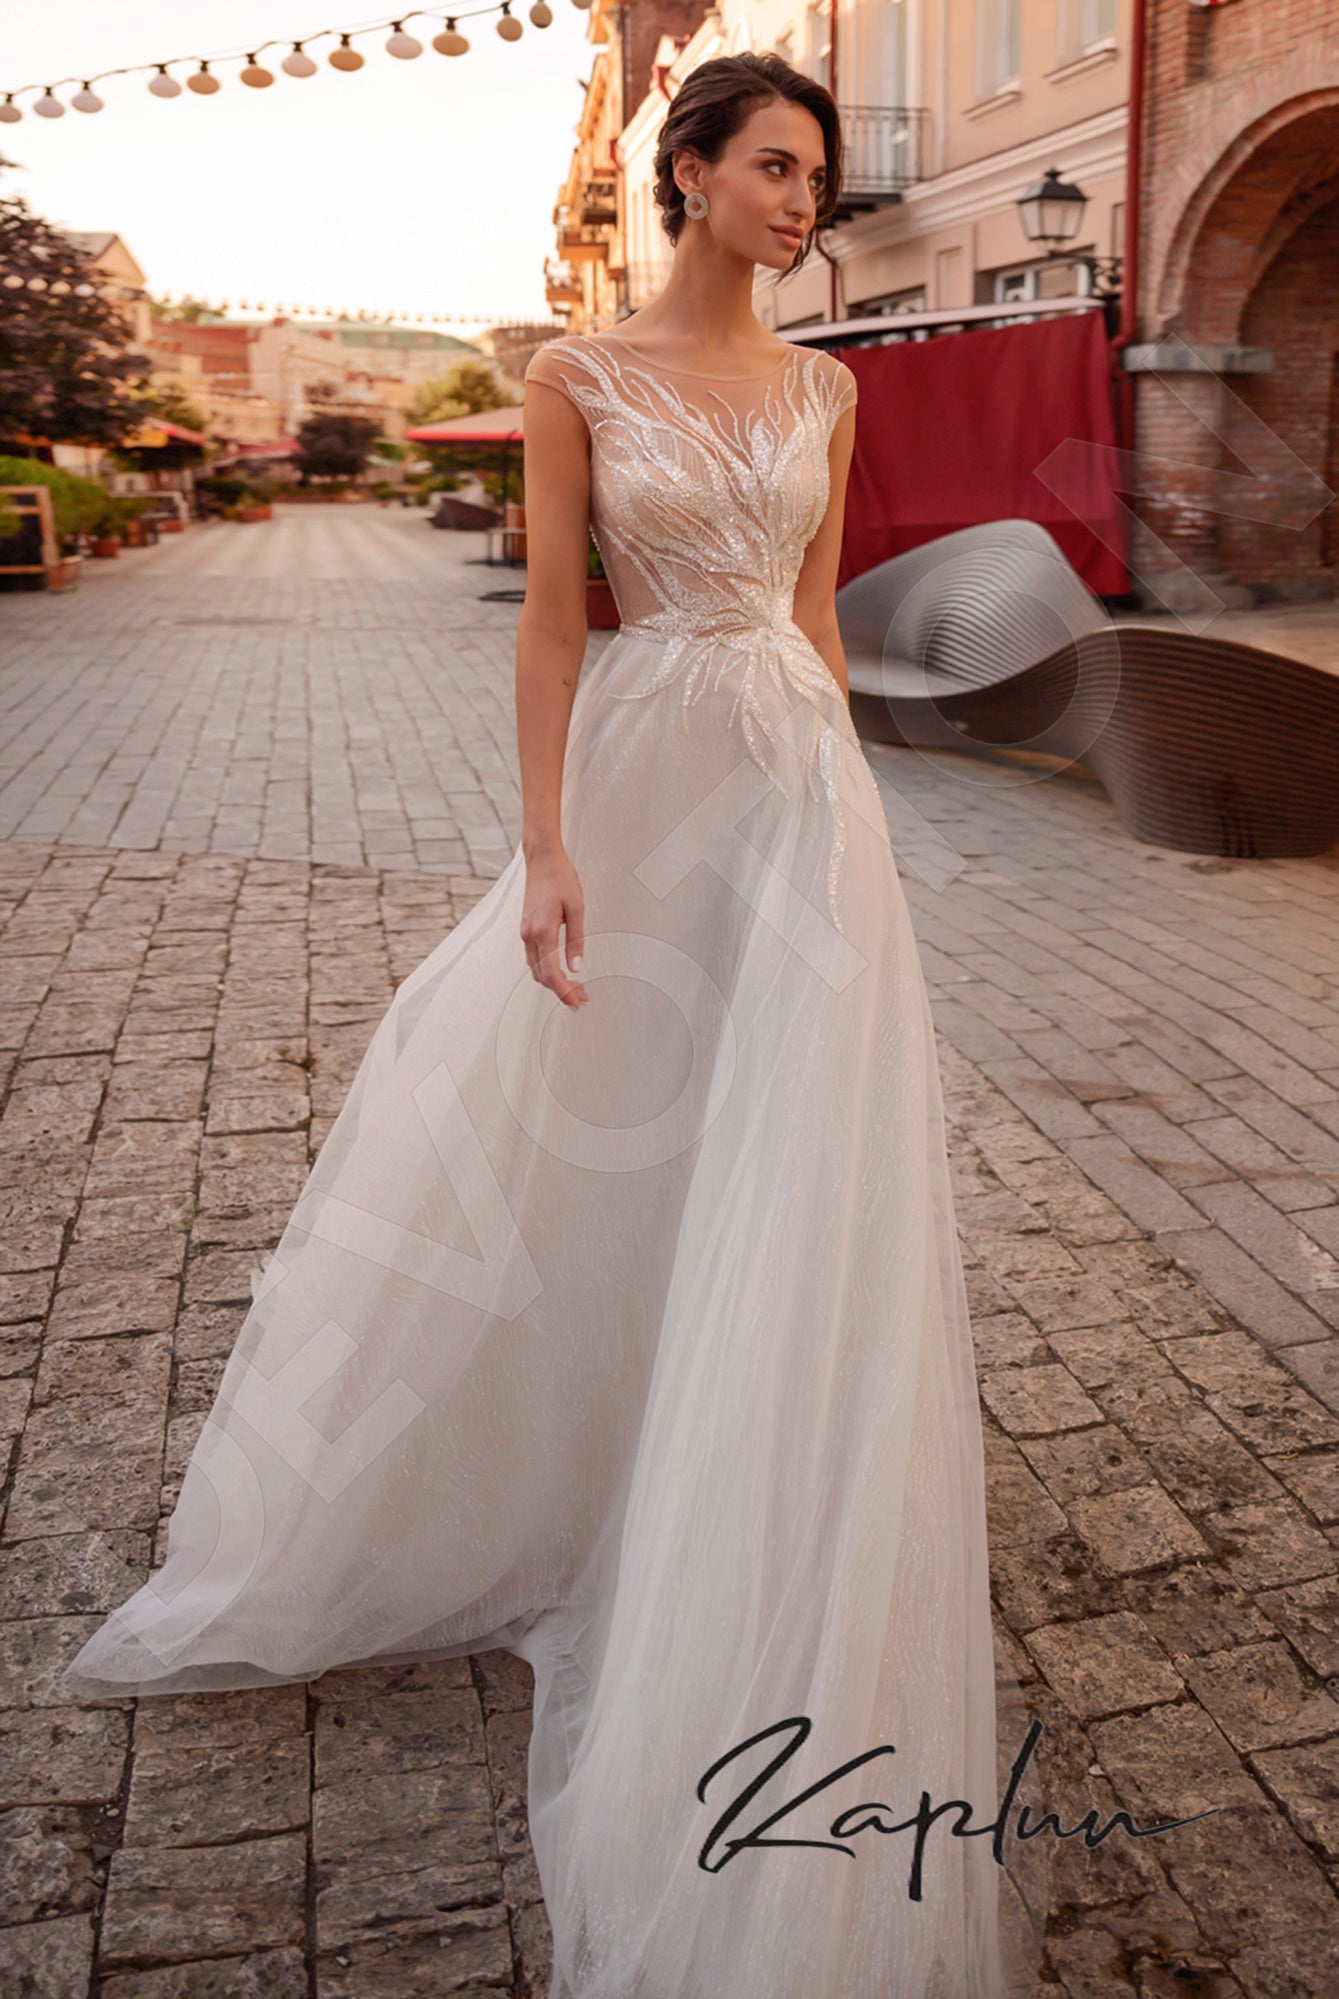 European Wedding Dresses - Papilio Bridal